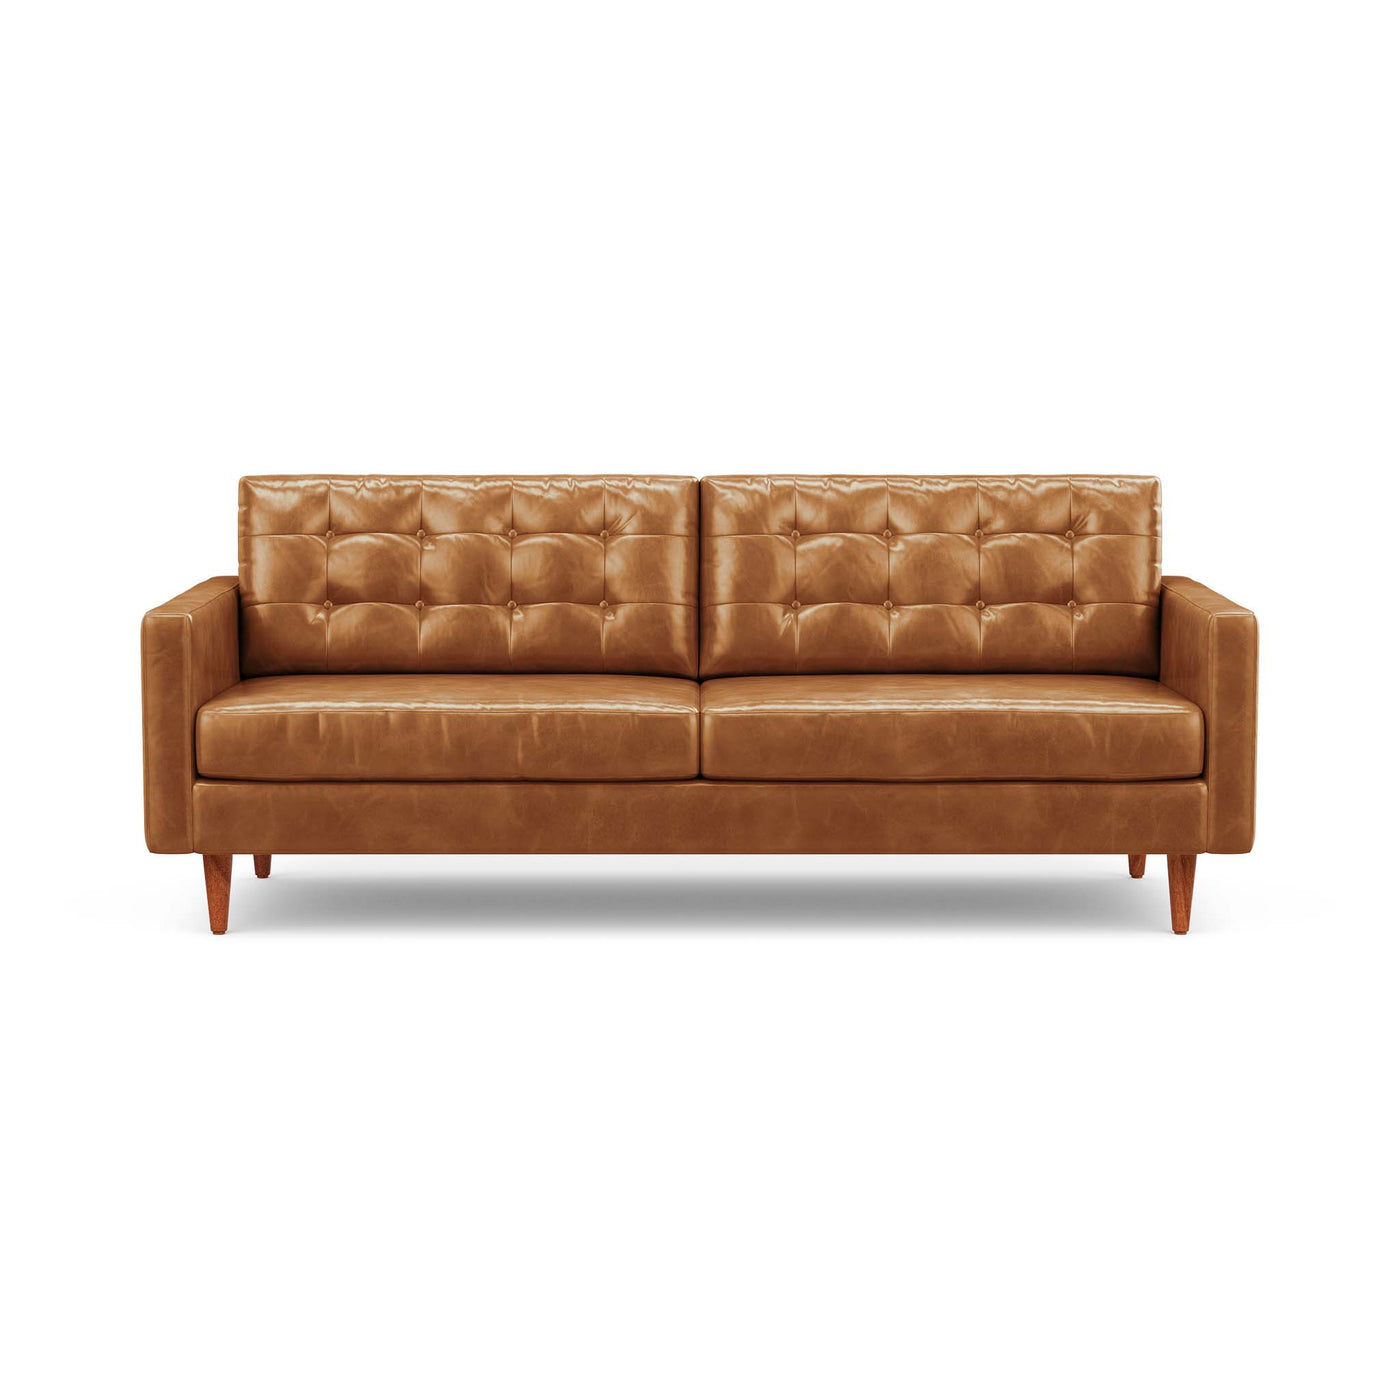 Quinn Collection: Furniture for a Modern Home – Perch Furniture